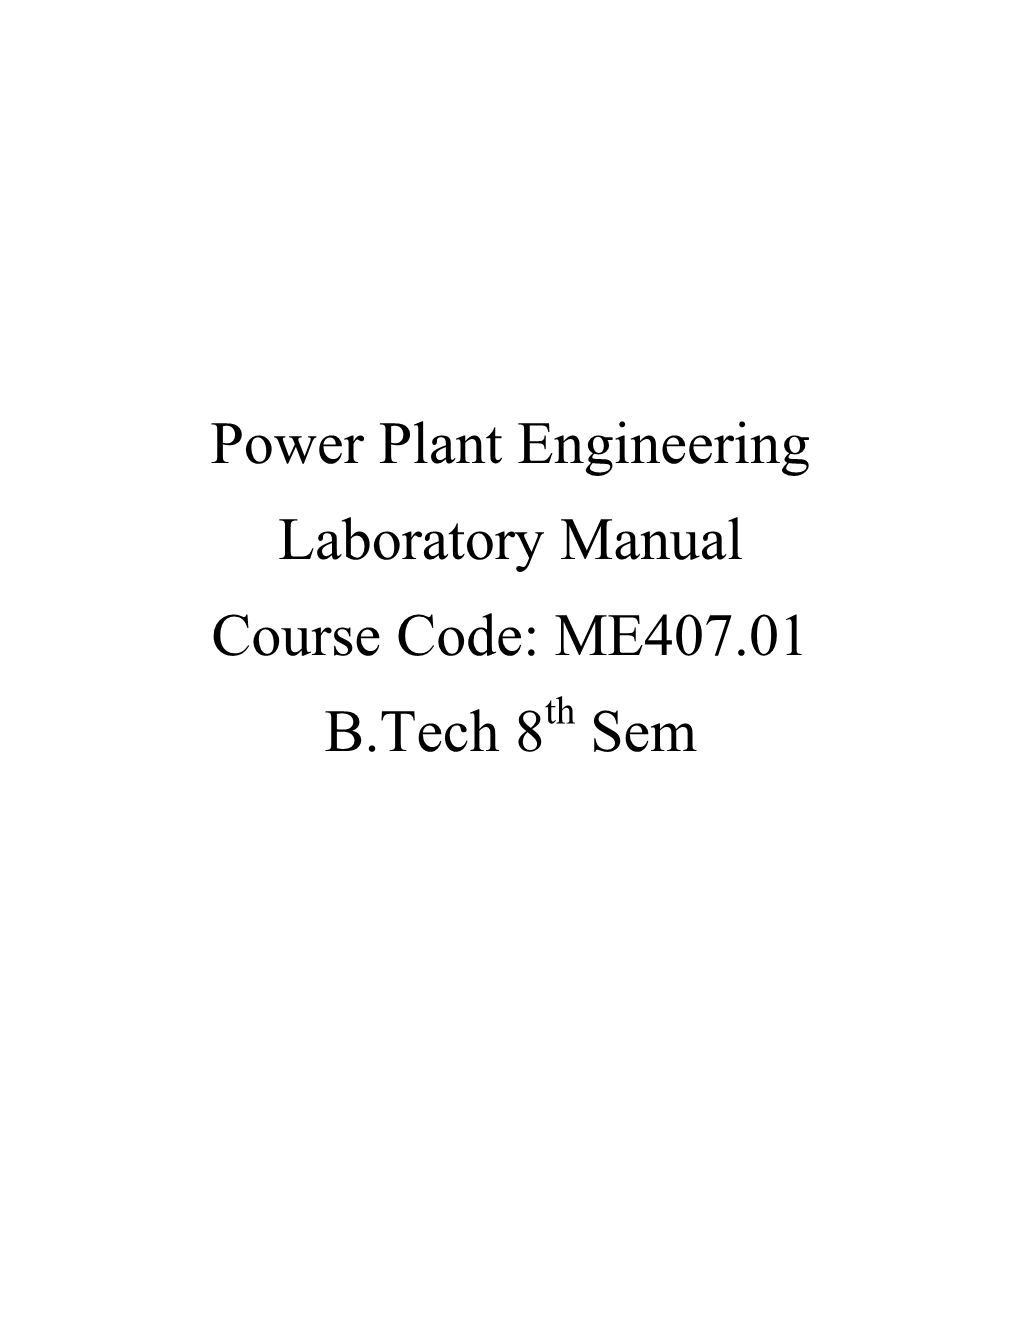 Power Plant Engineering Laboratory Manual Course Code: ME407.01 B.Tech 8Th Sem